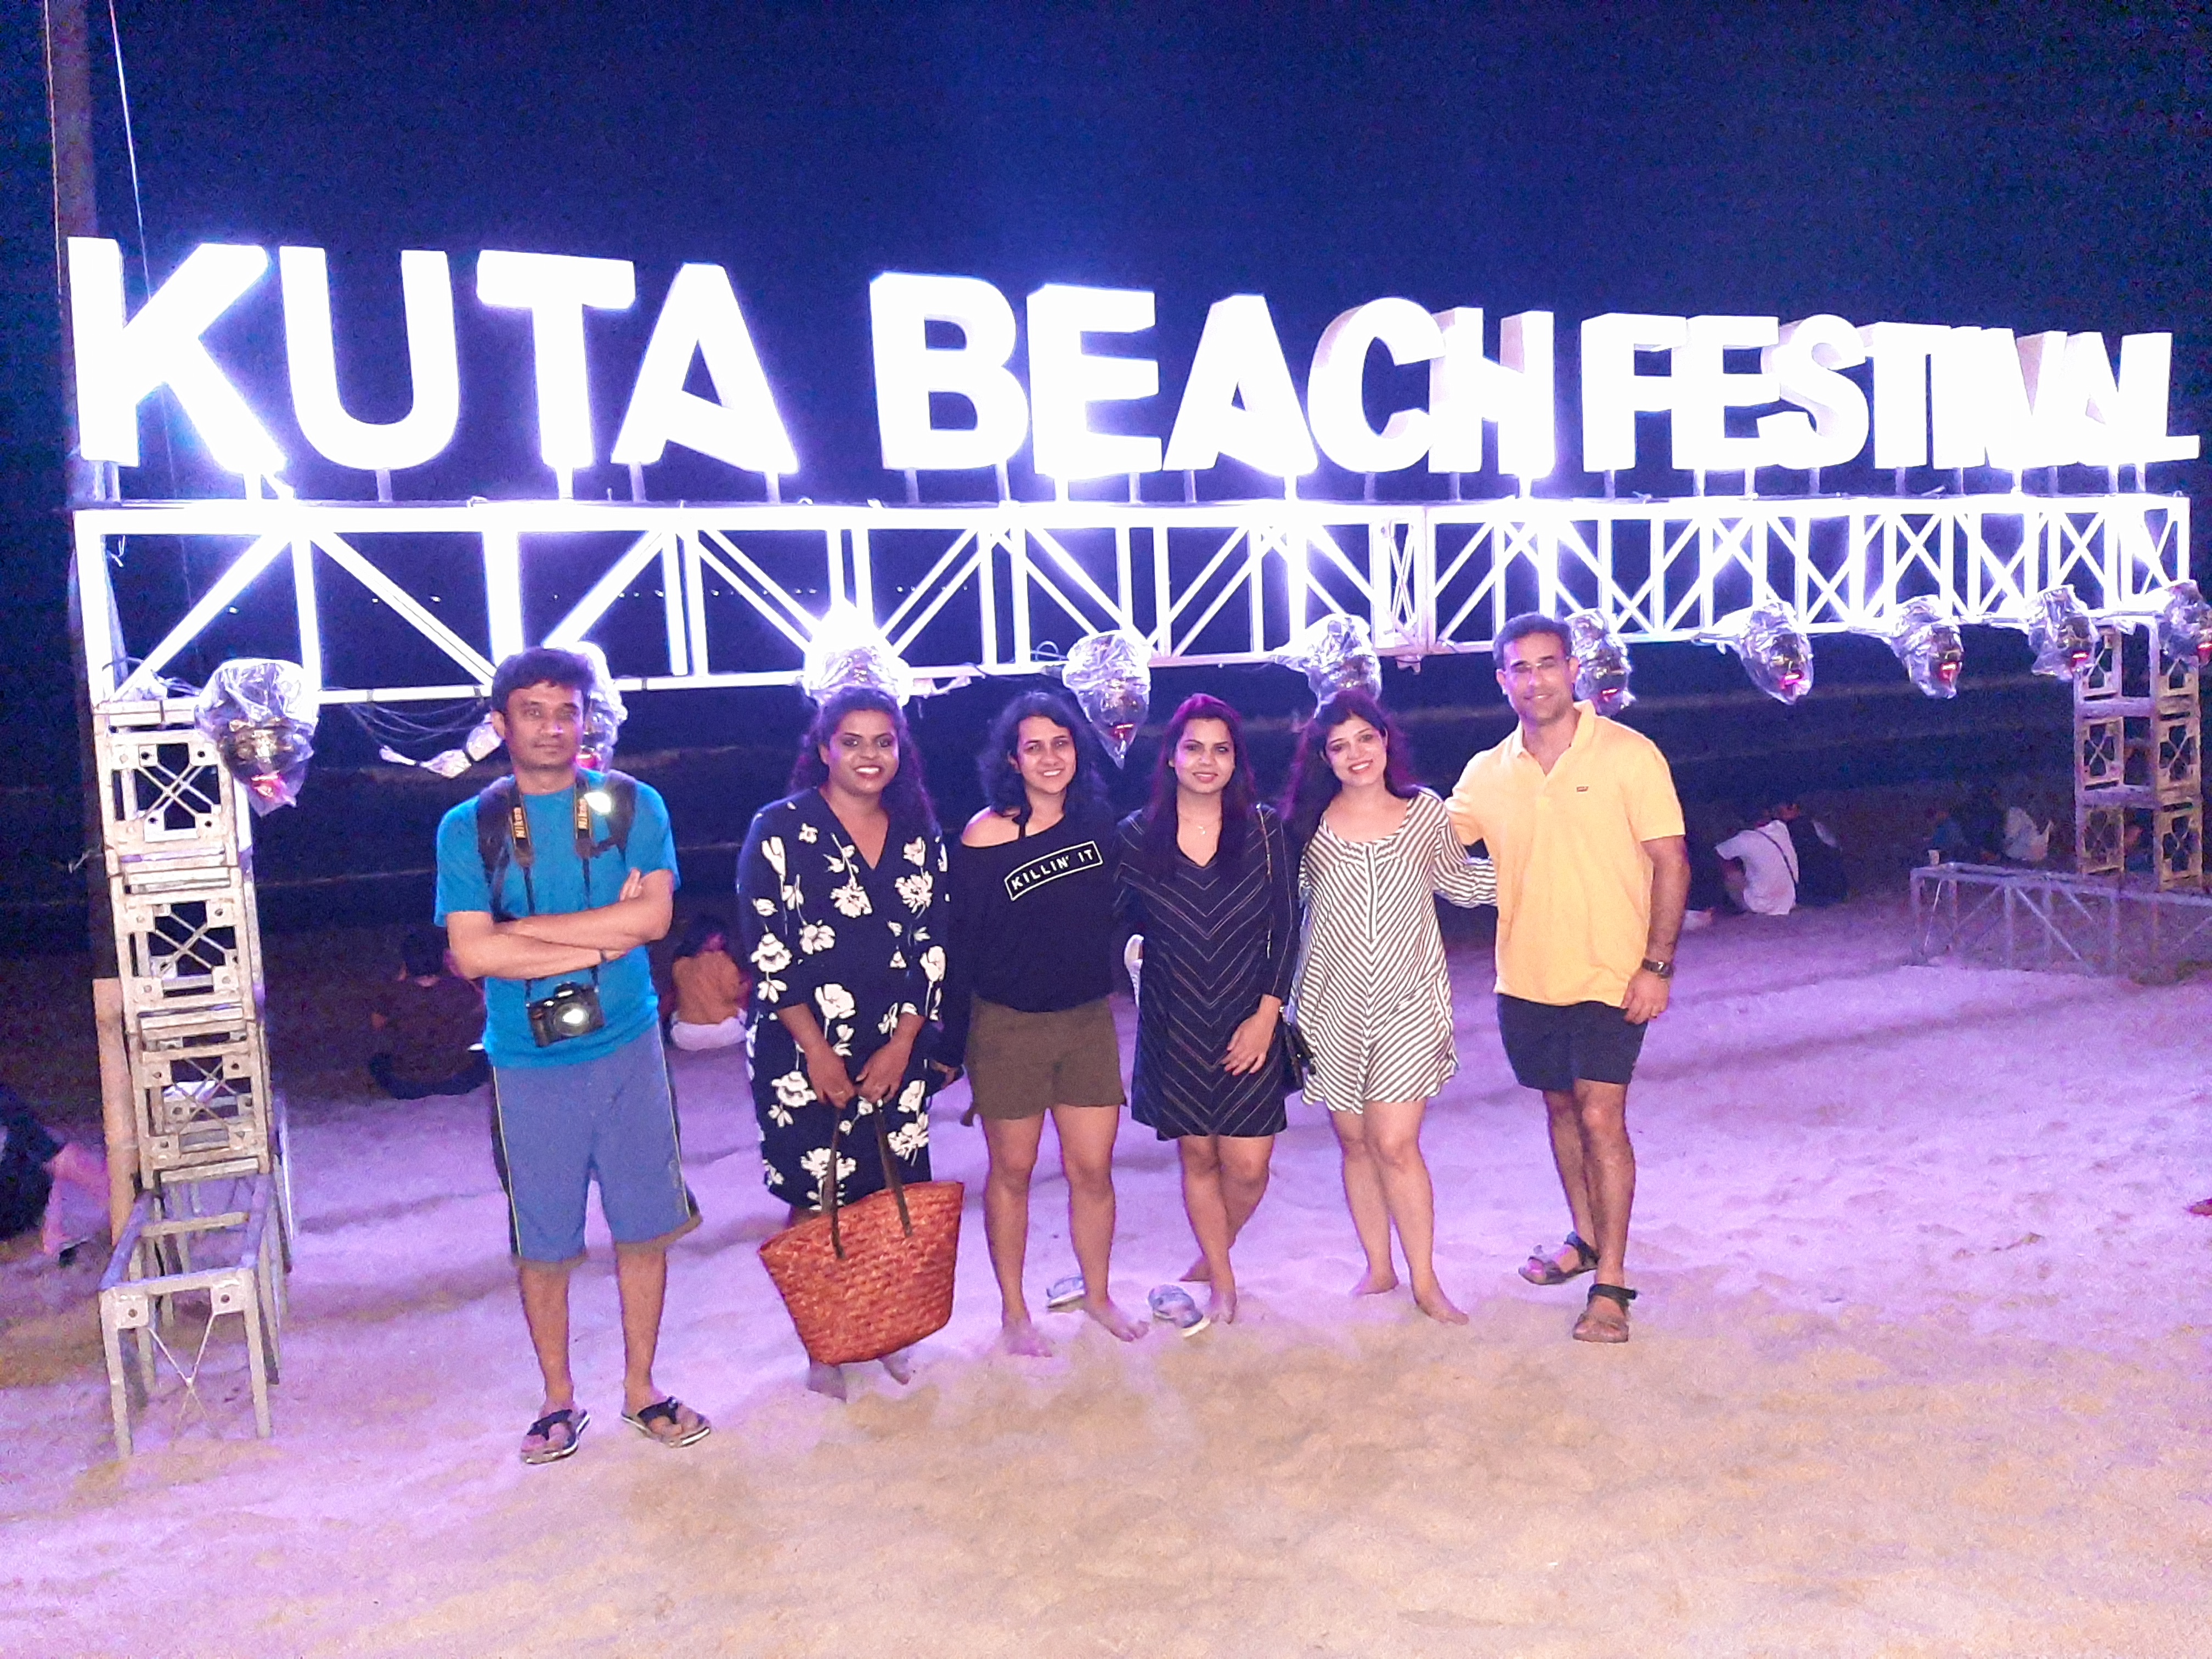 Kuta beach festival